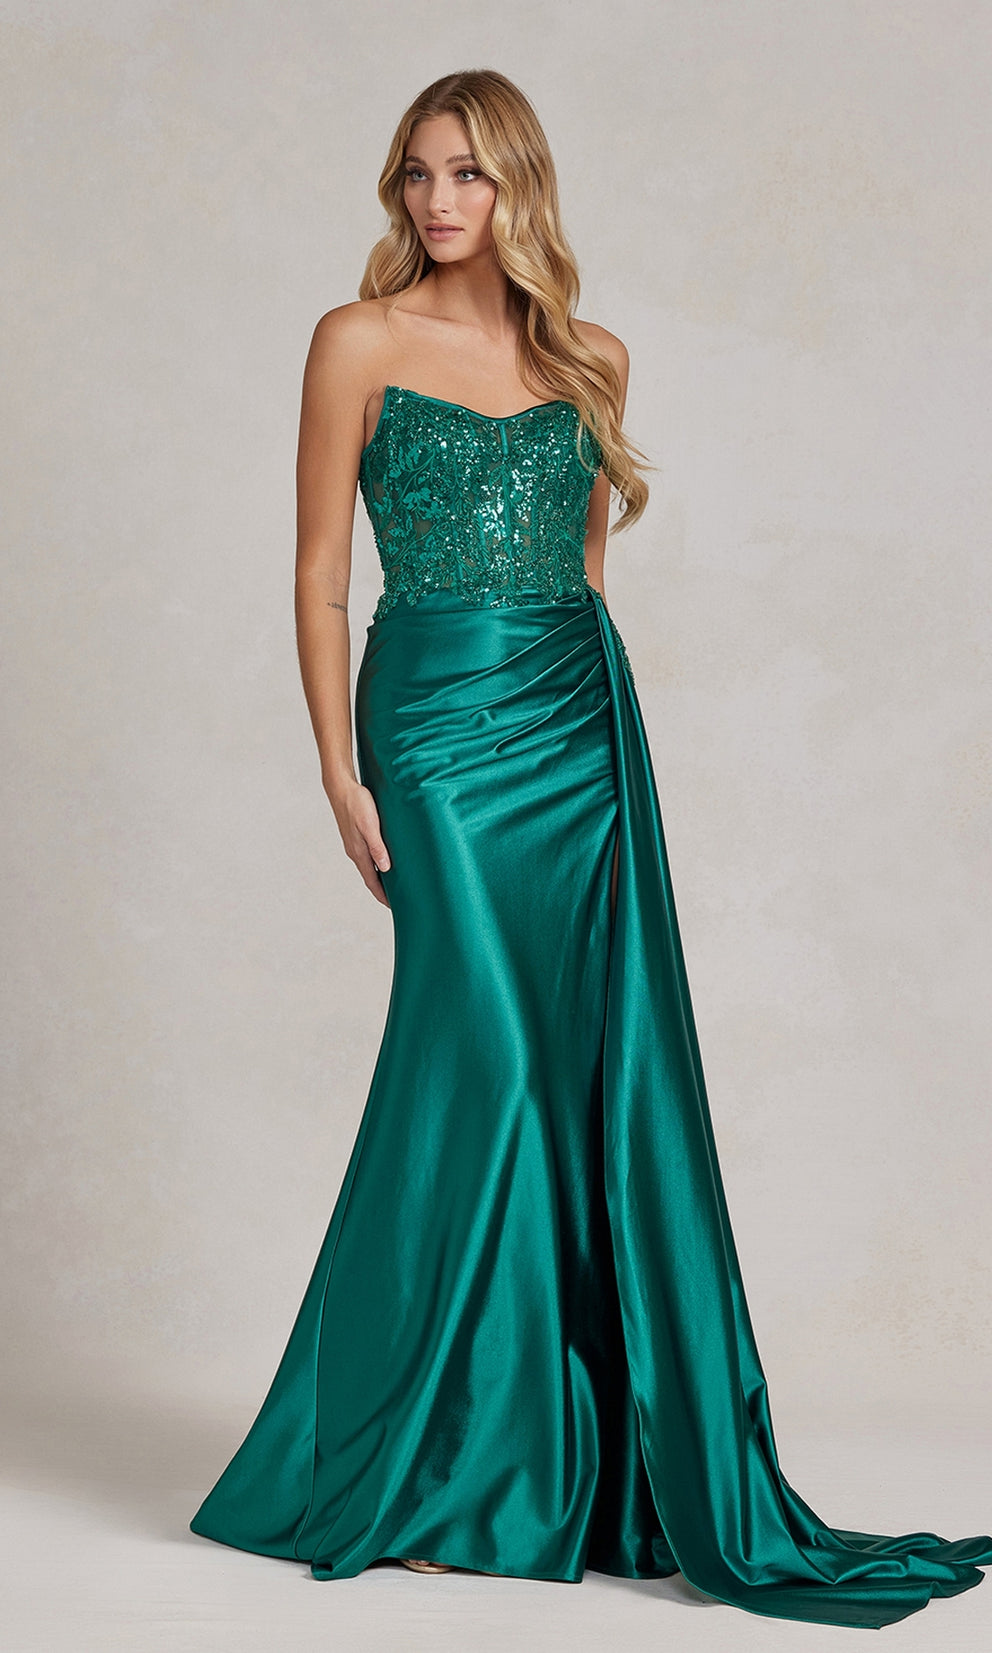 KIANA Emerald Green Strapless Sequin Bustier Corset Silky Mermaid Prom Formal Dress